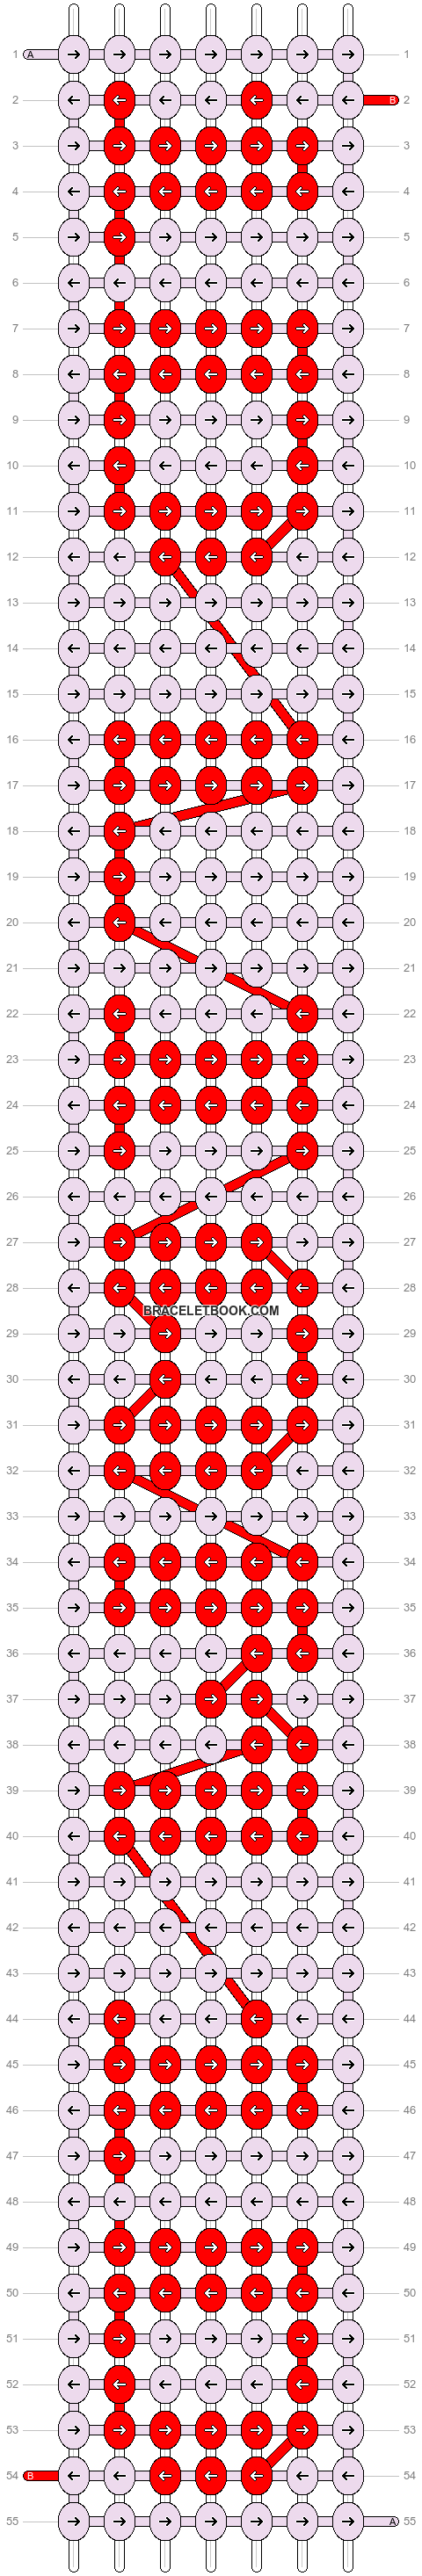 Alpha pattern #6328 pattern